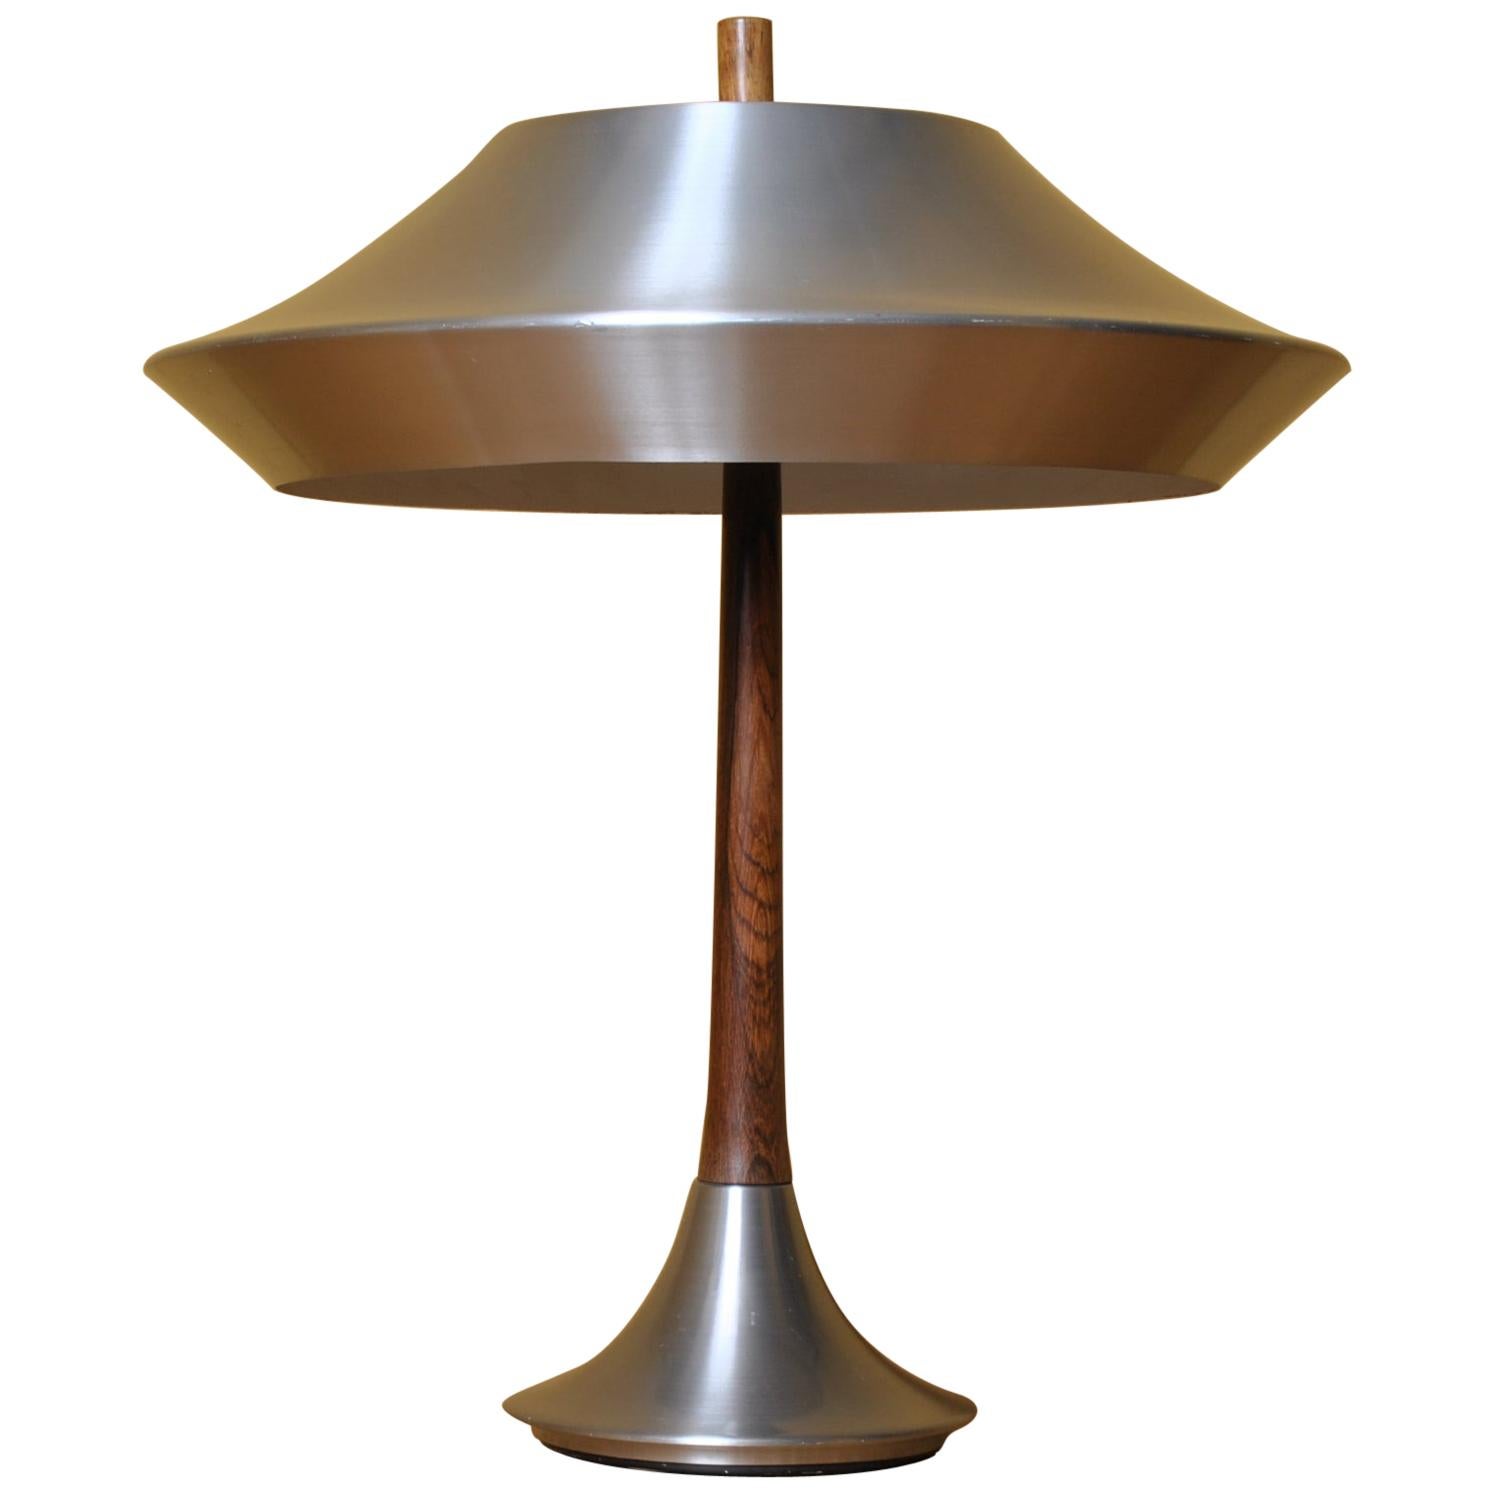 Stunning Danish Mid-Century table lamp. Svend Aage Holm Sorensen.
Rewired.